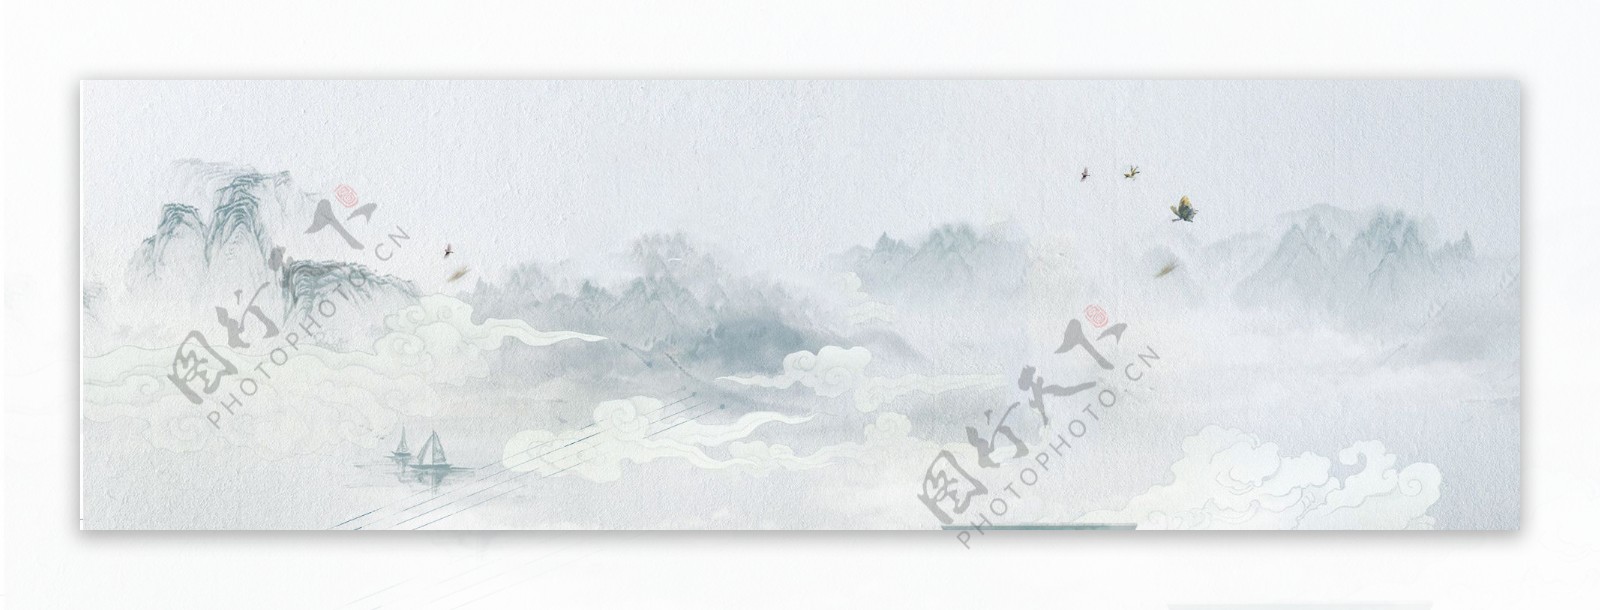 中国画专用创意banner设计